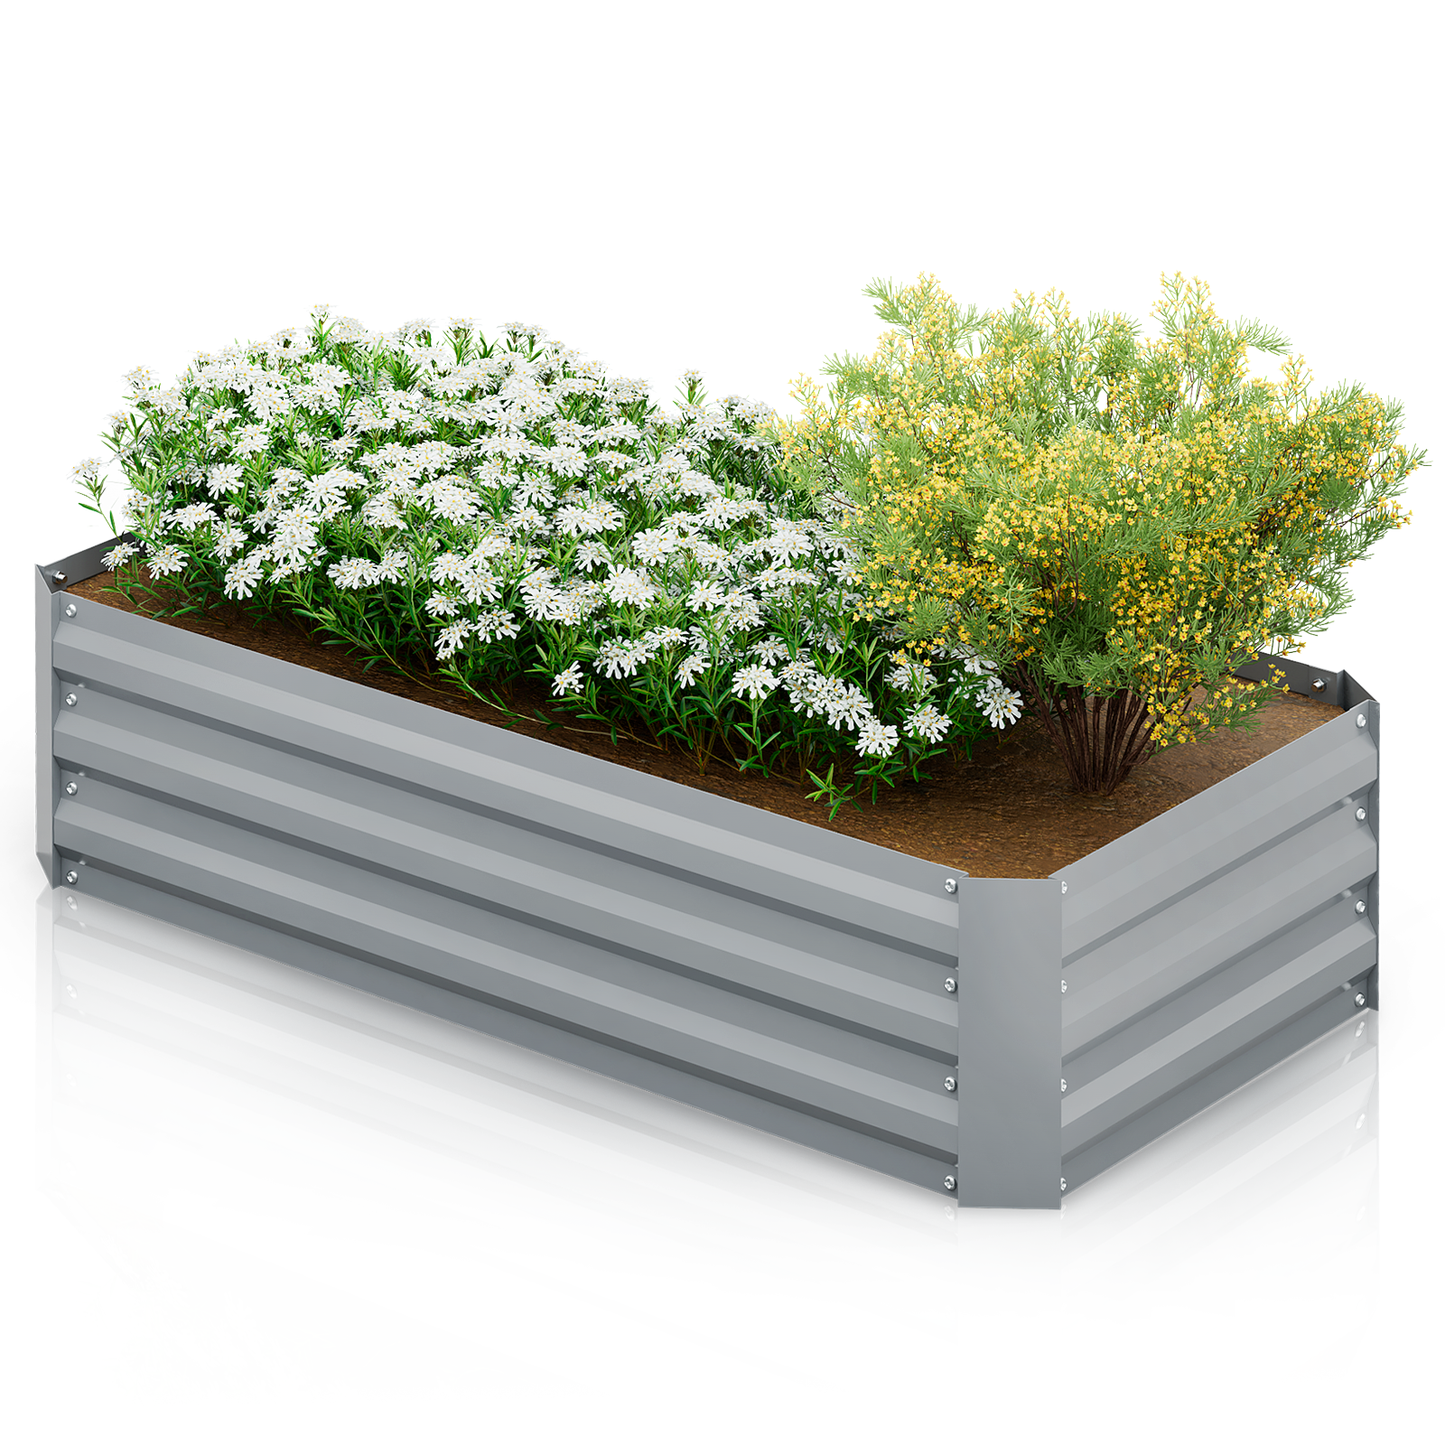 48.5"x25"x12" Patio Metal Raised Garden Bed Kit Vegetable Flower Planter Box